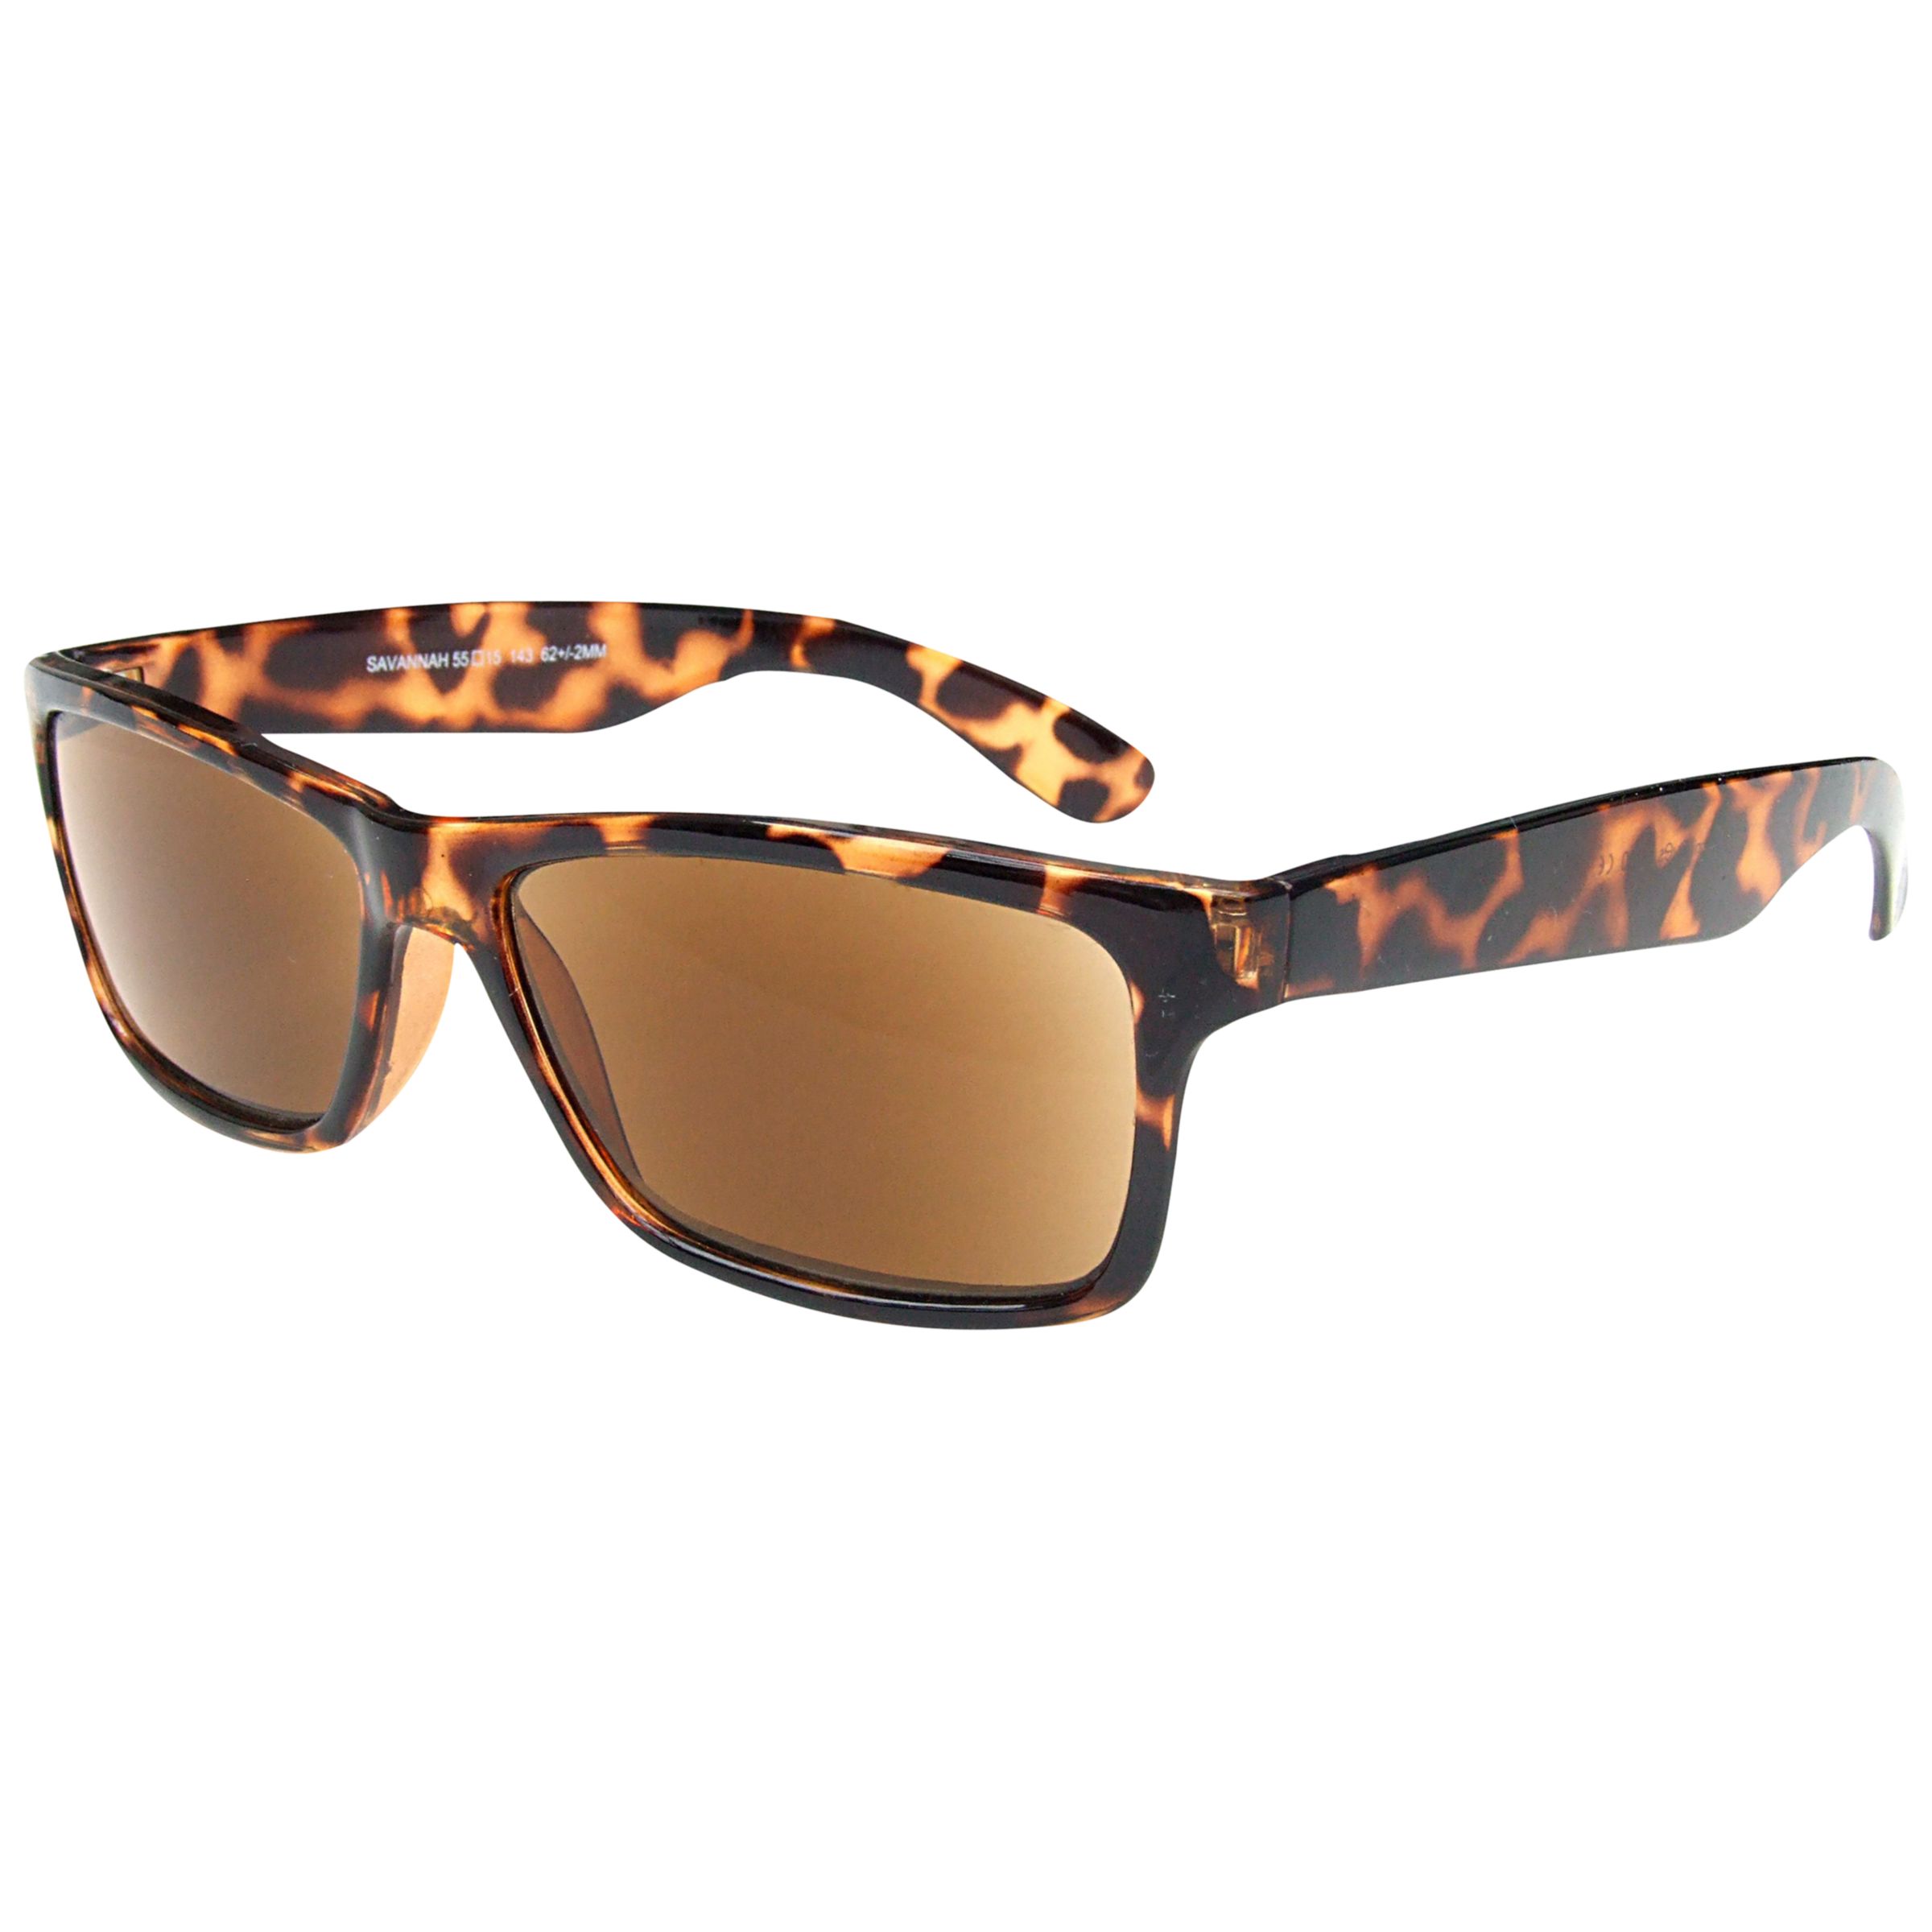 Buy Magnif Eyes Savannah Unisex Very Narrow Fit Ready Reader Sunglasses, Shell Online at johnlewis.com